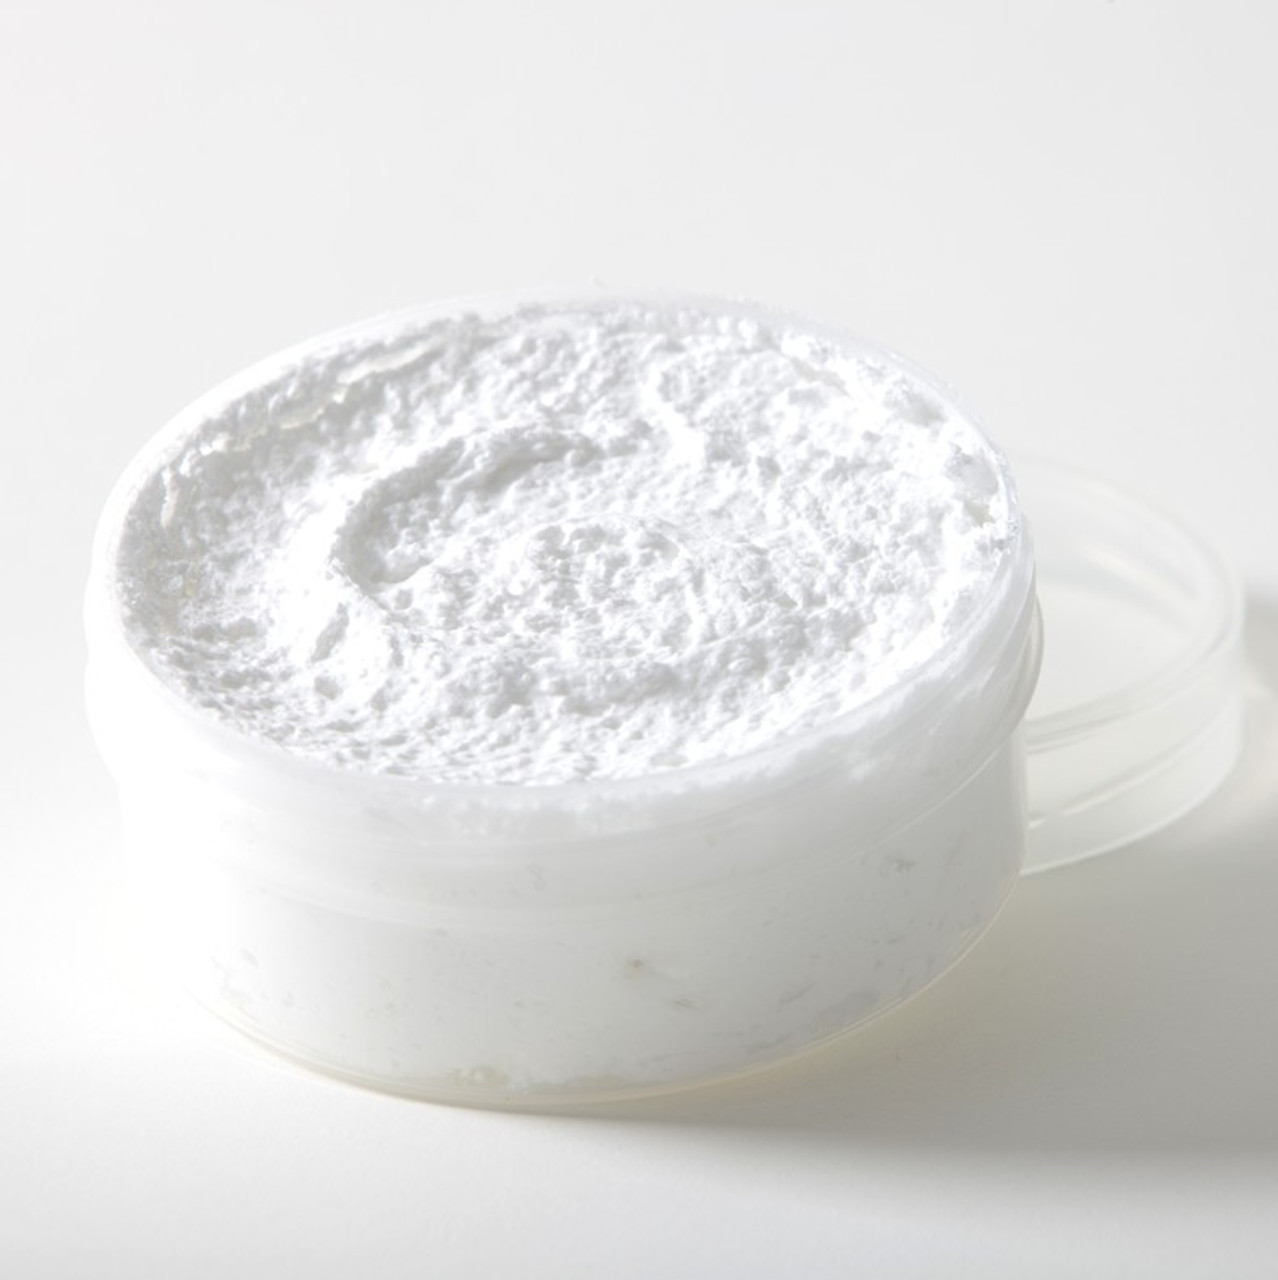 Stephenson Crystal Ultra Clear (HCVS) Melt & Pour Soap Base